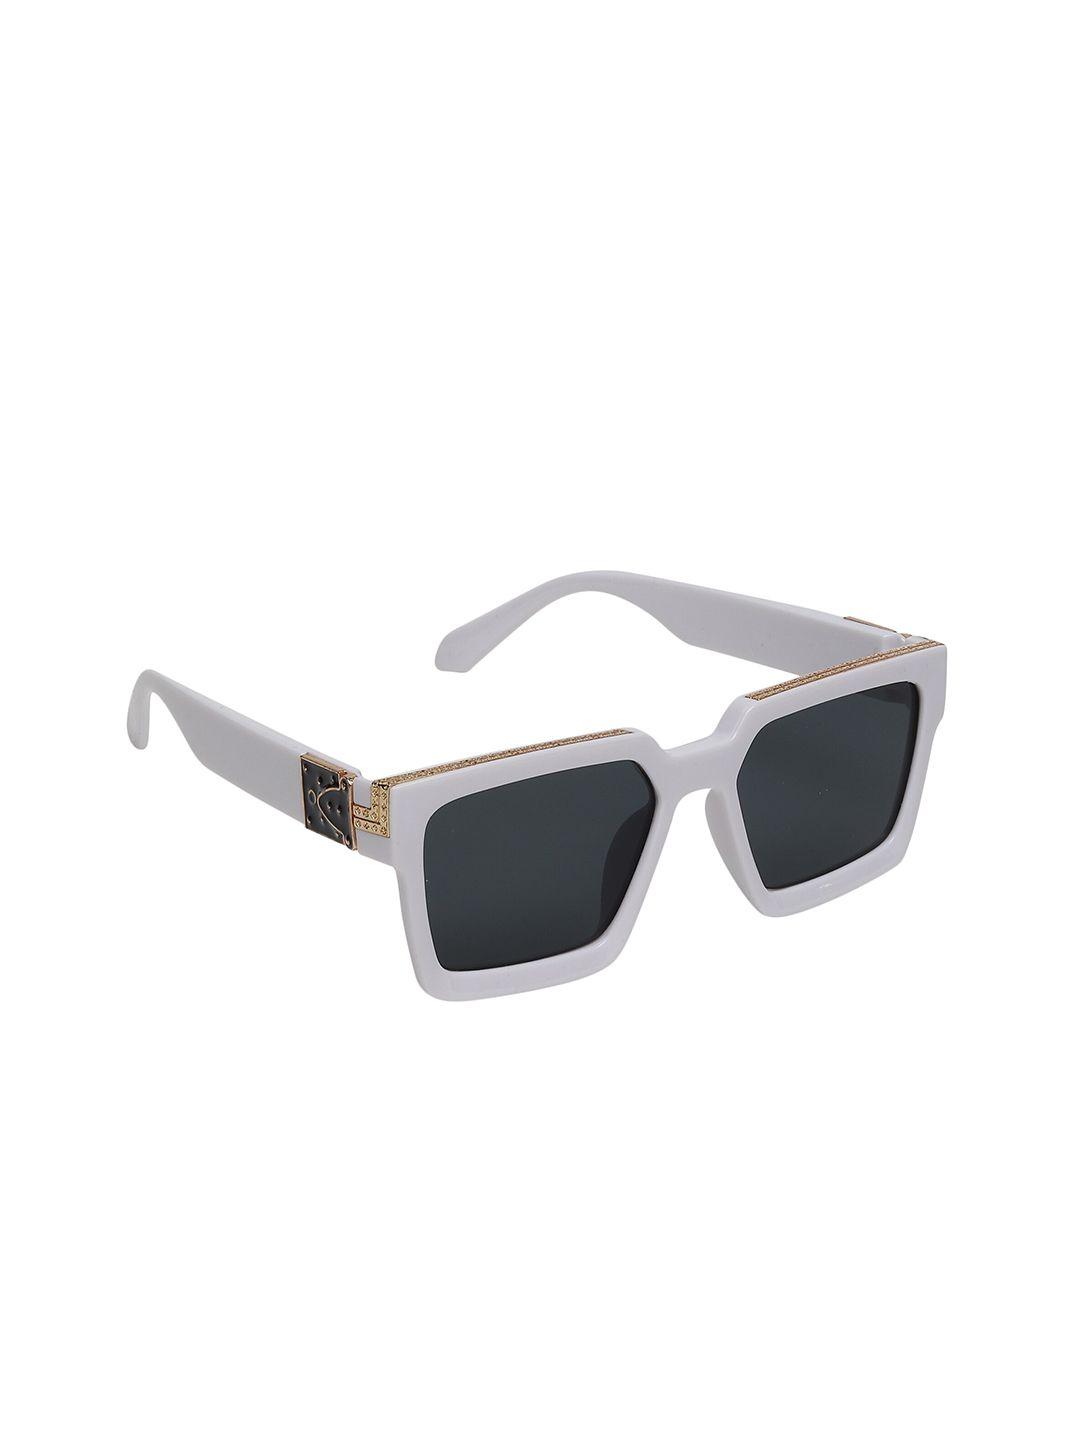 celebrity sunglasses unisex grey lens square sunglasses uv protected lens cl-cl-shahid-01